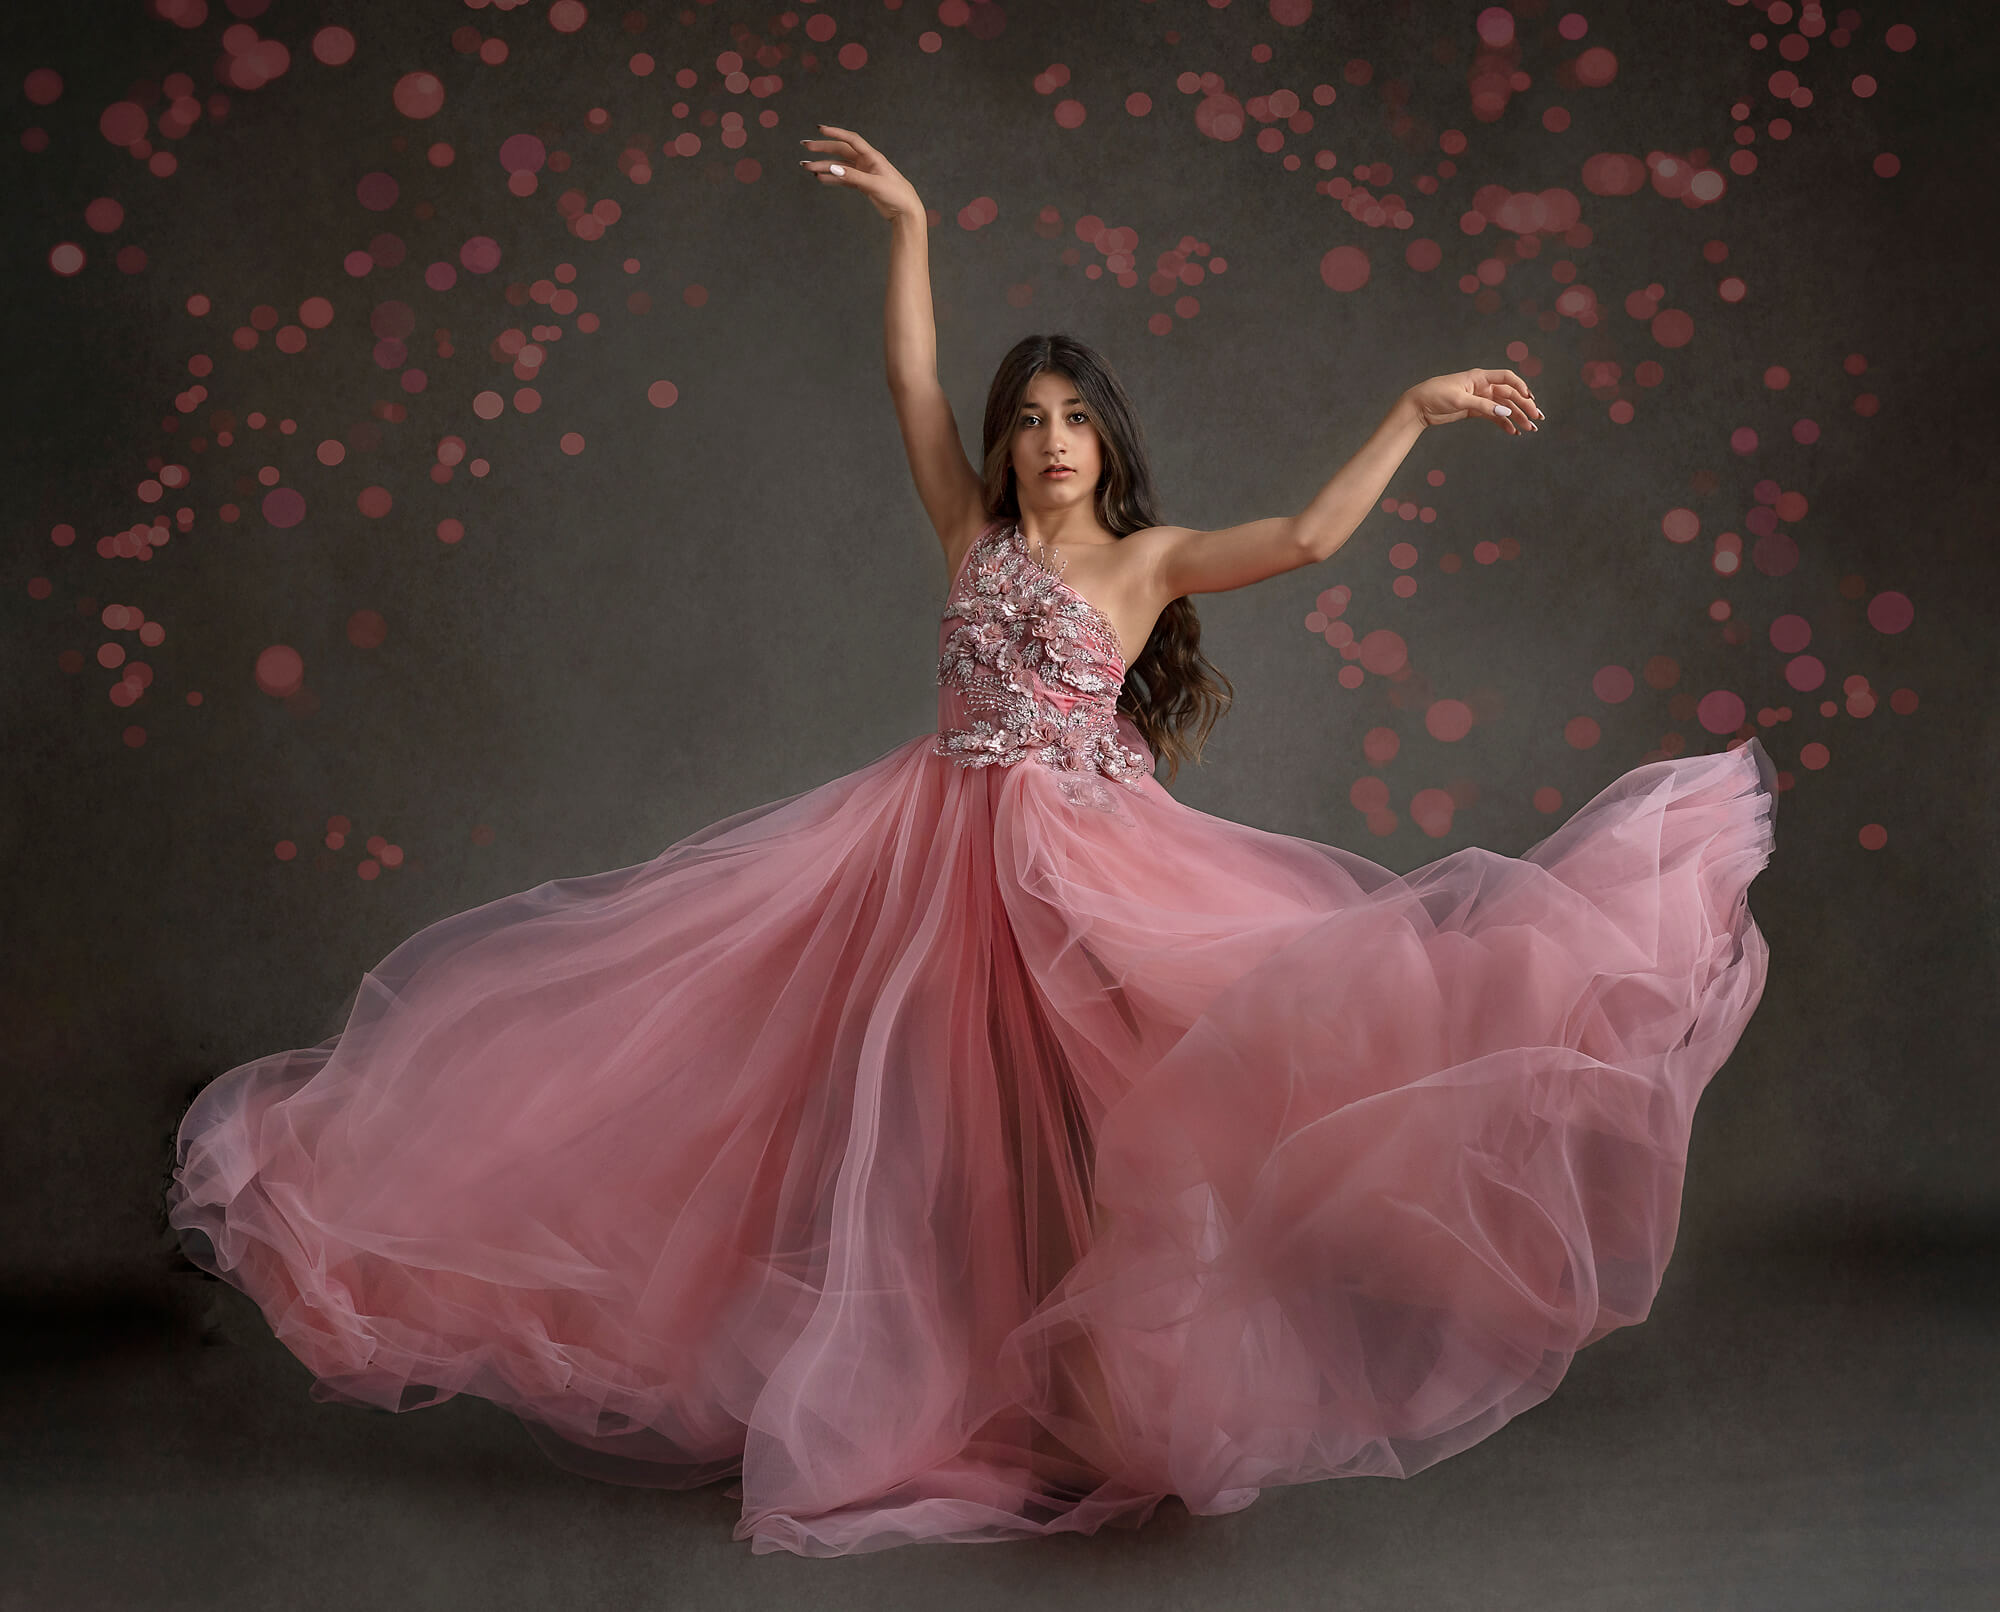 Redondo Beach dancer twirling in pink dress